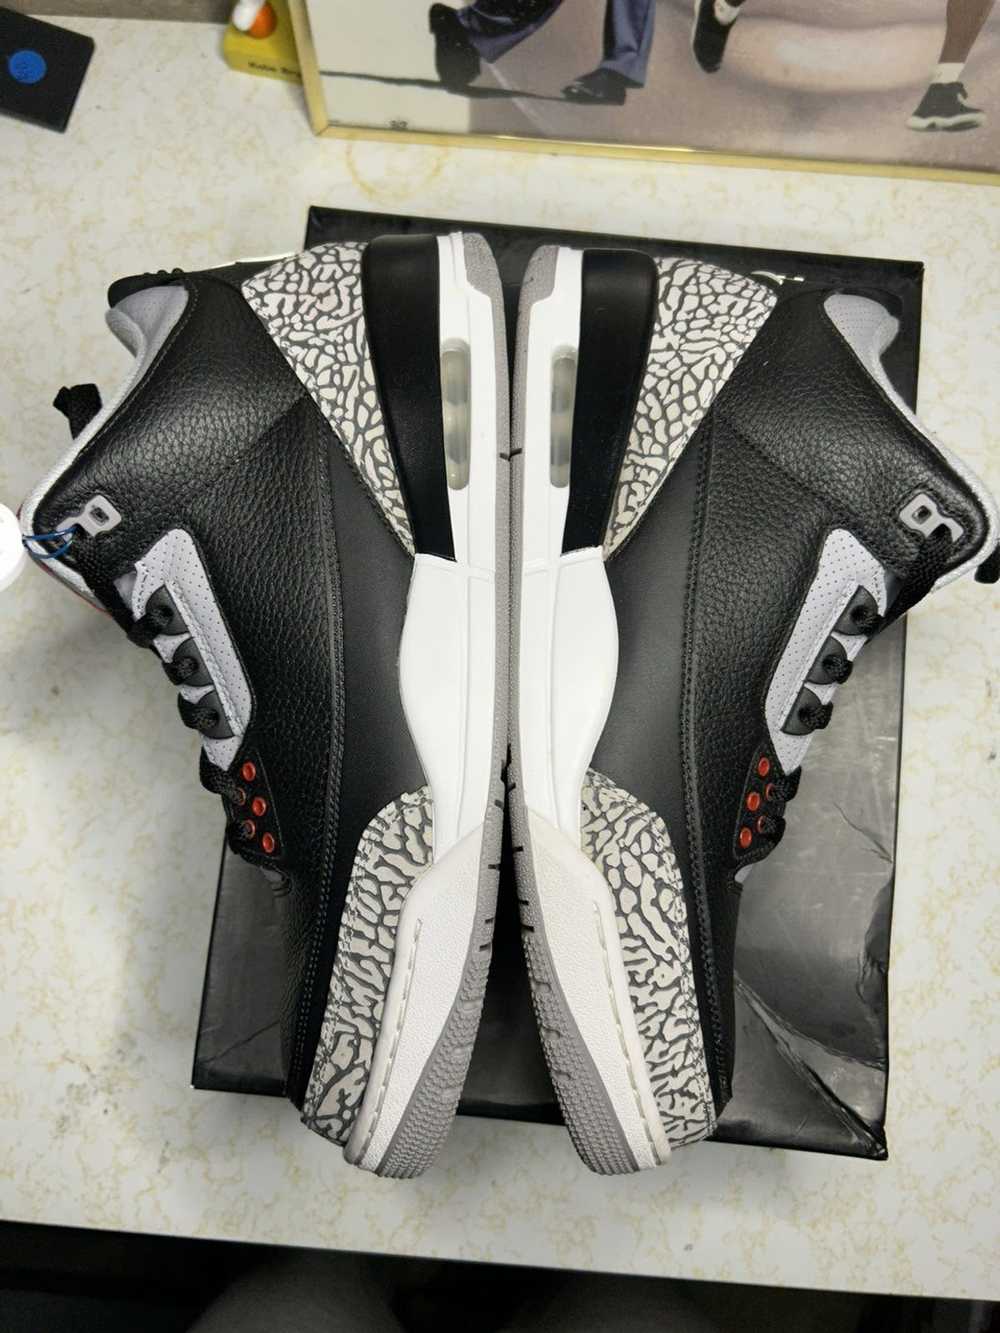 Jordan Brand Jordan Retro 3 “Black Cement” - image 3